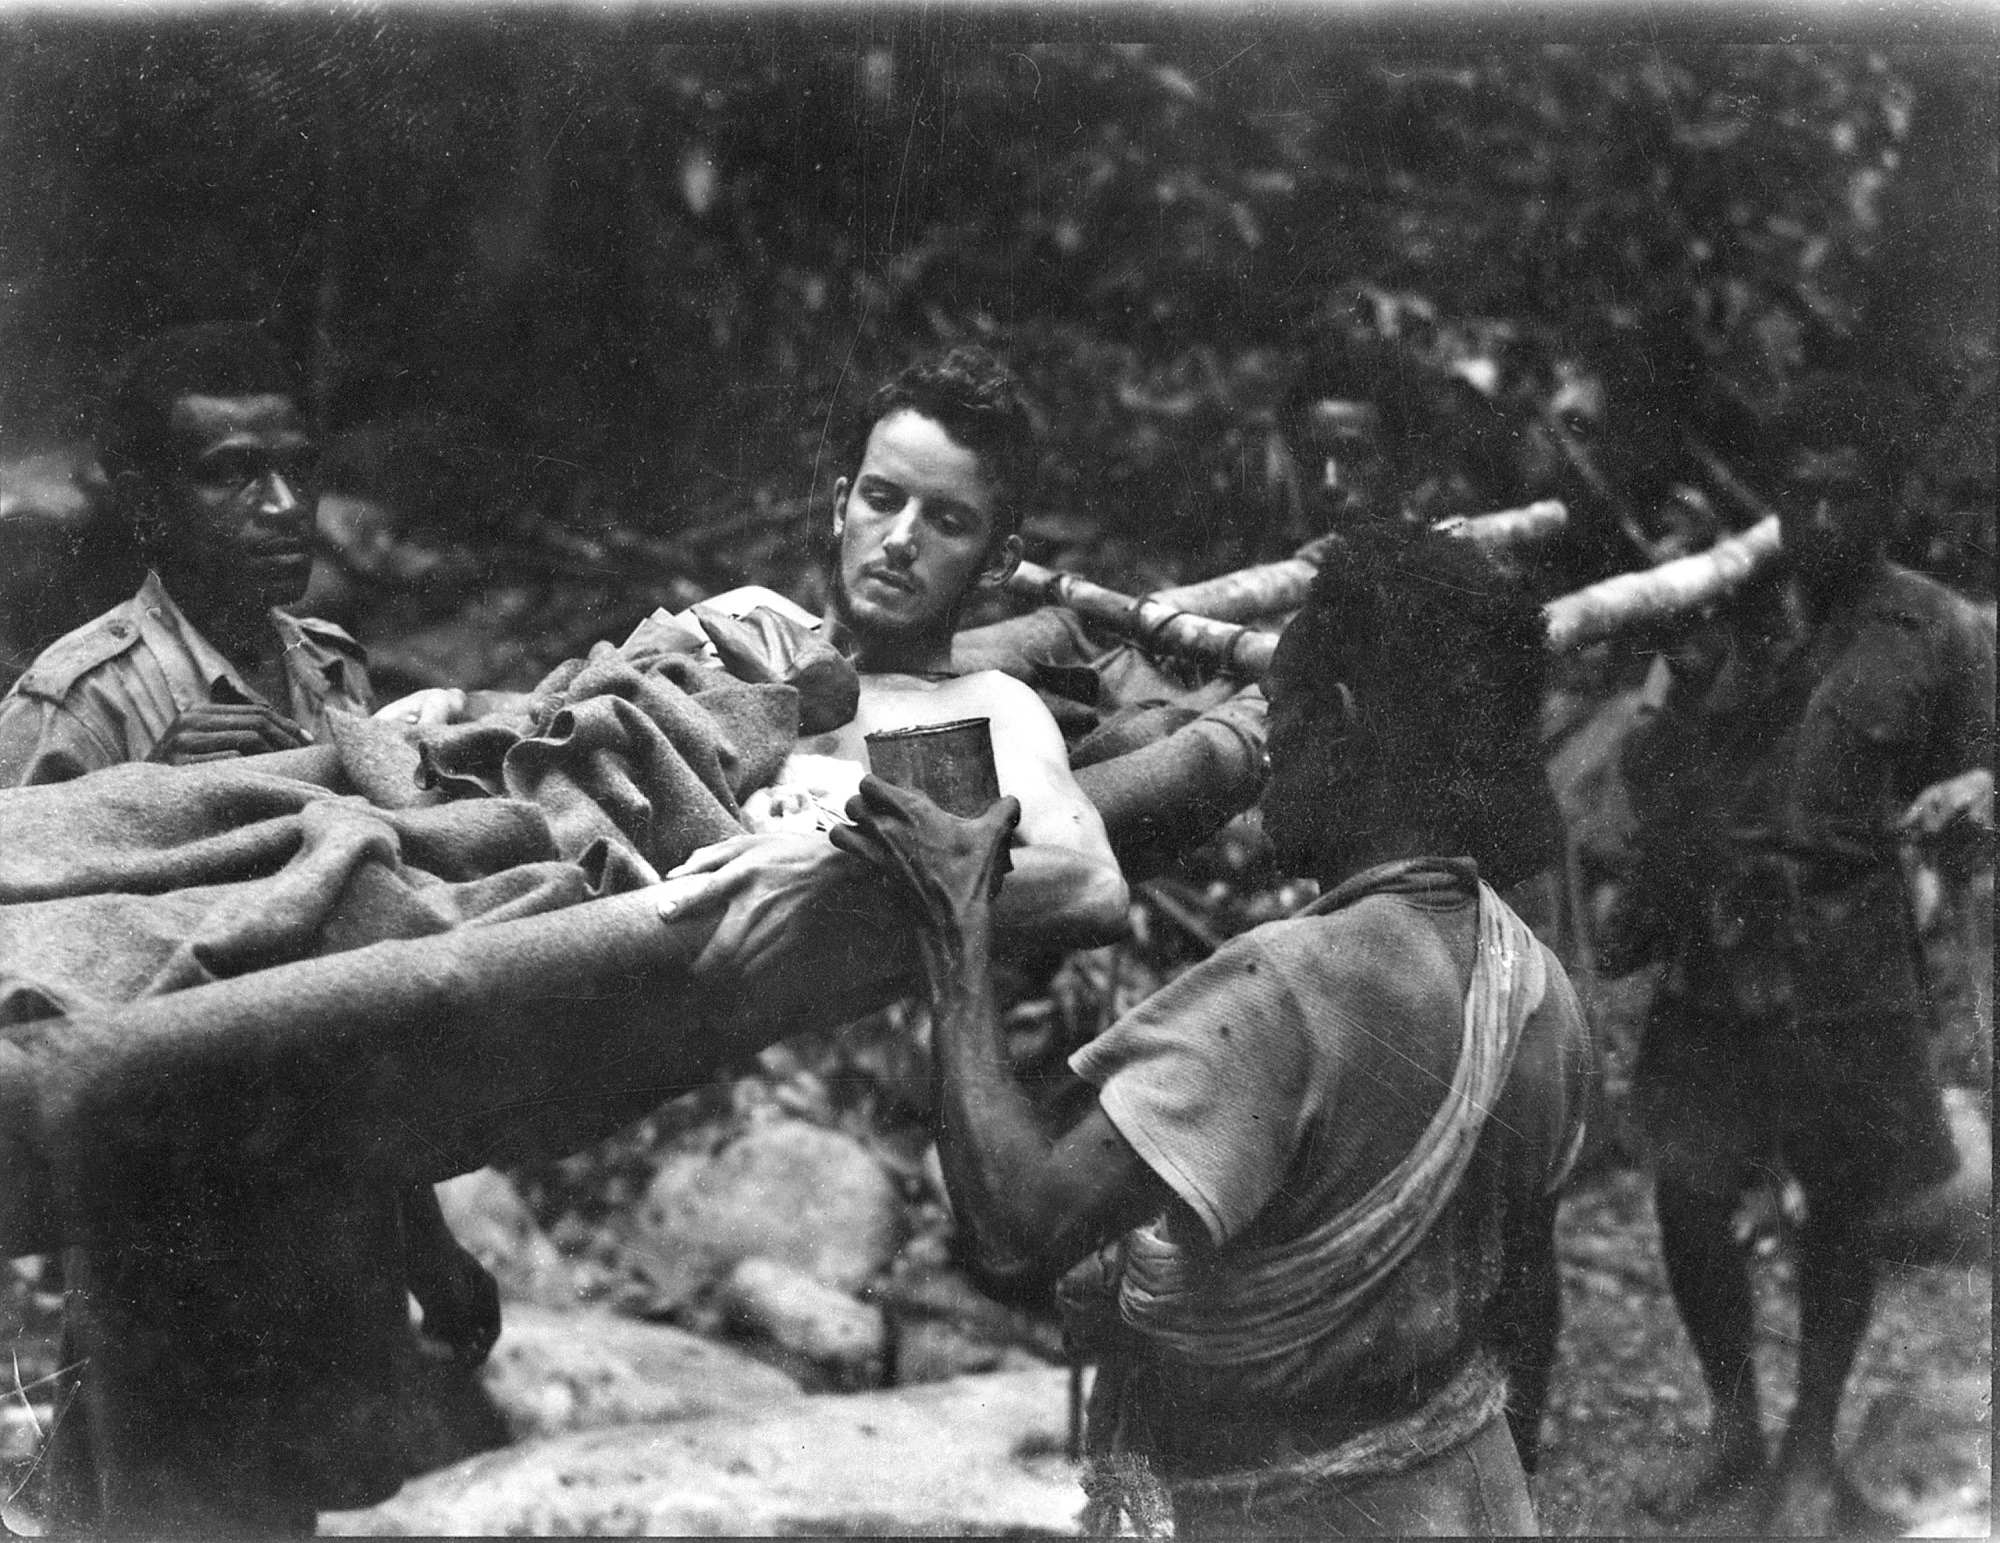 Papuan stretcher bearers help an injured Australian soldier on the Kokoda Trail, 1942.